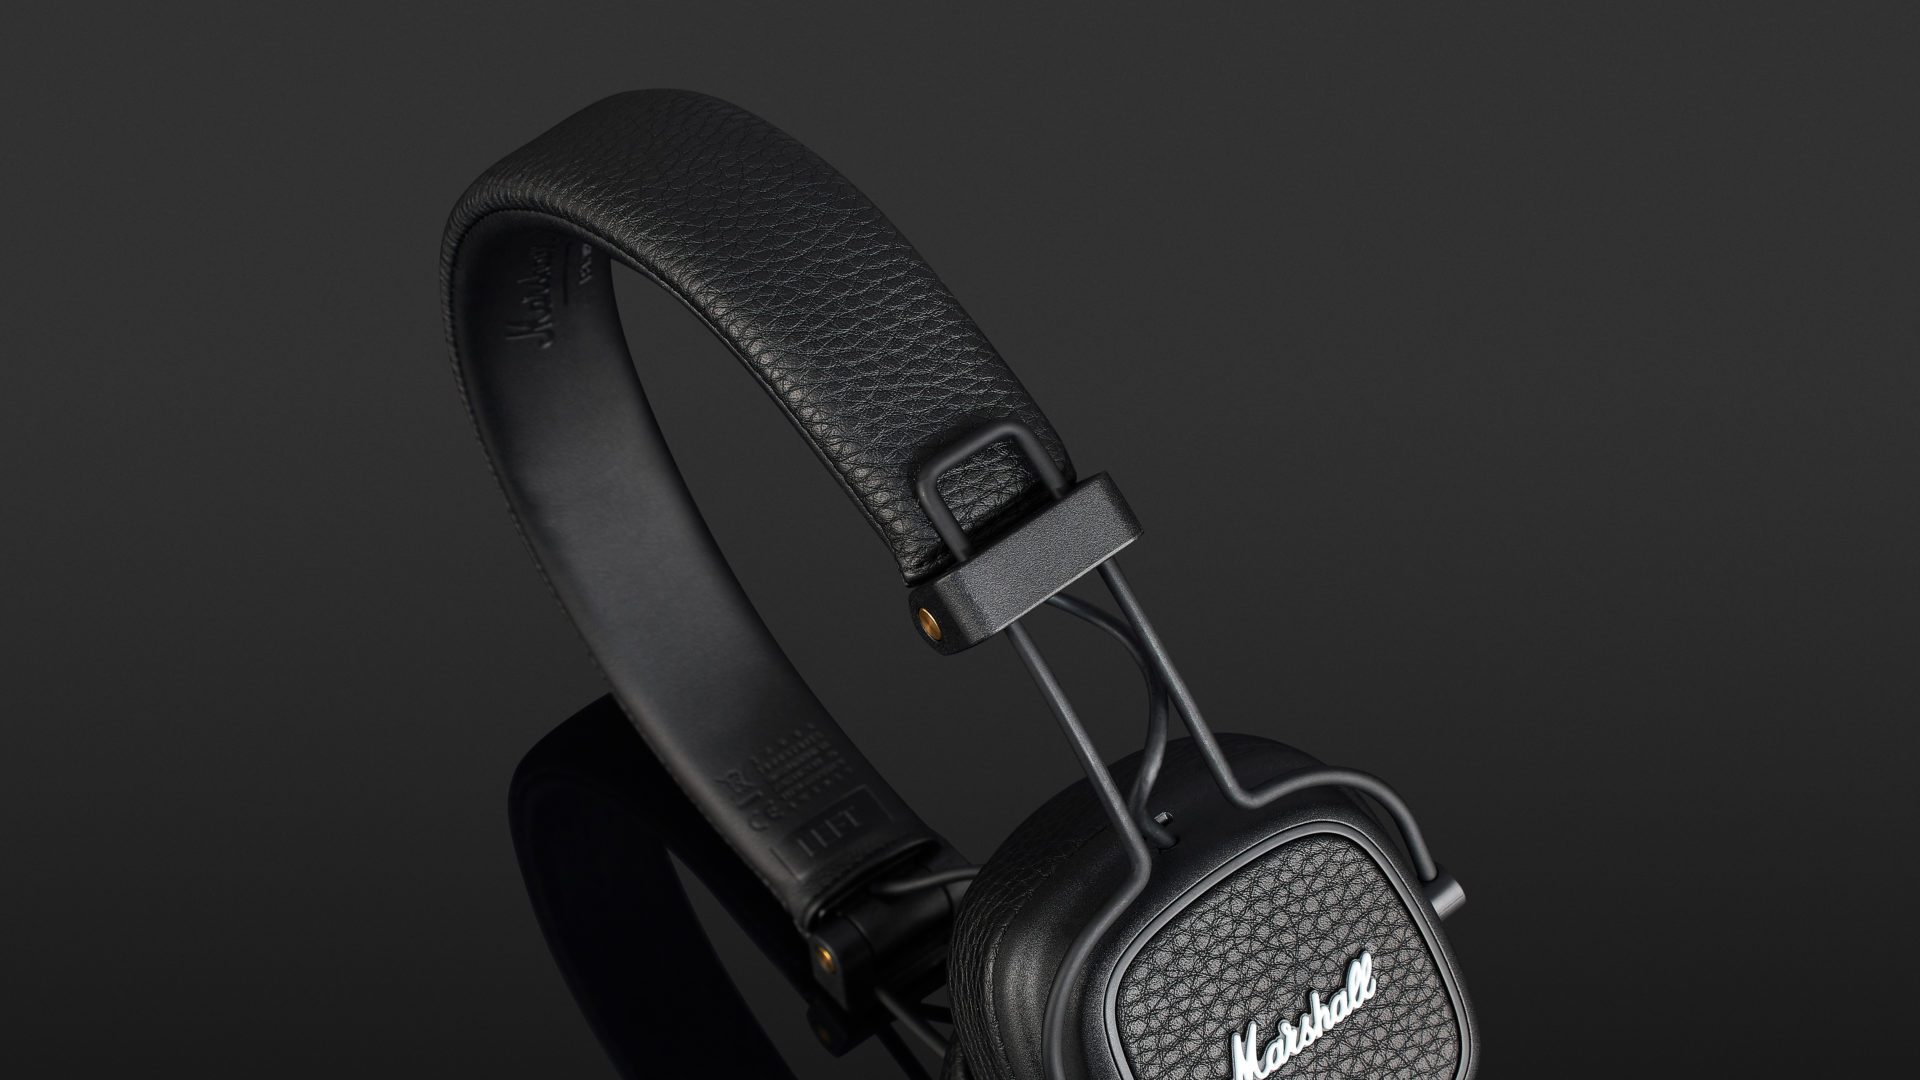 Marshall Major III Bluetooth Review | headphonecheck.com